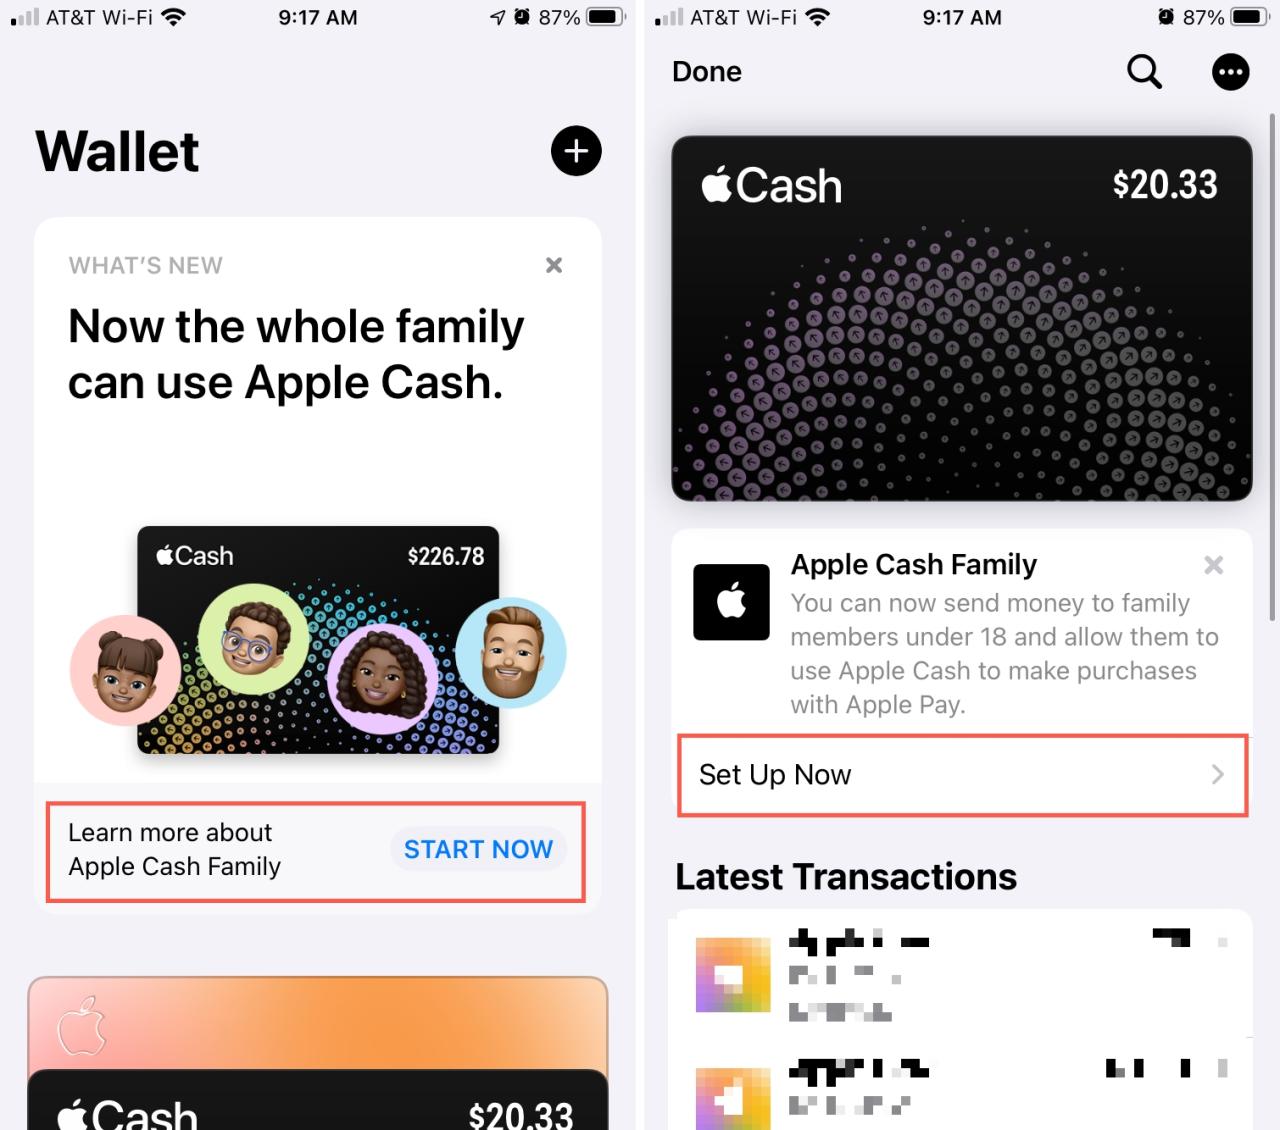 Configurar Apple Cash Family desde Wallet